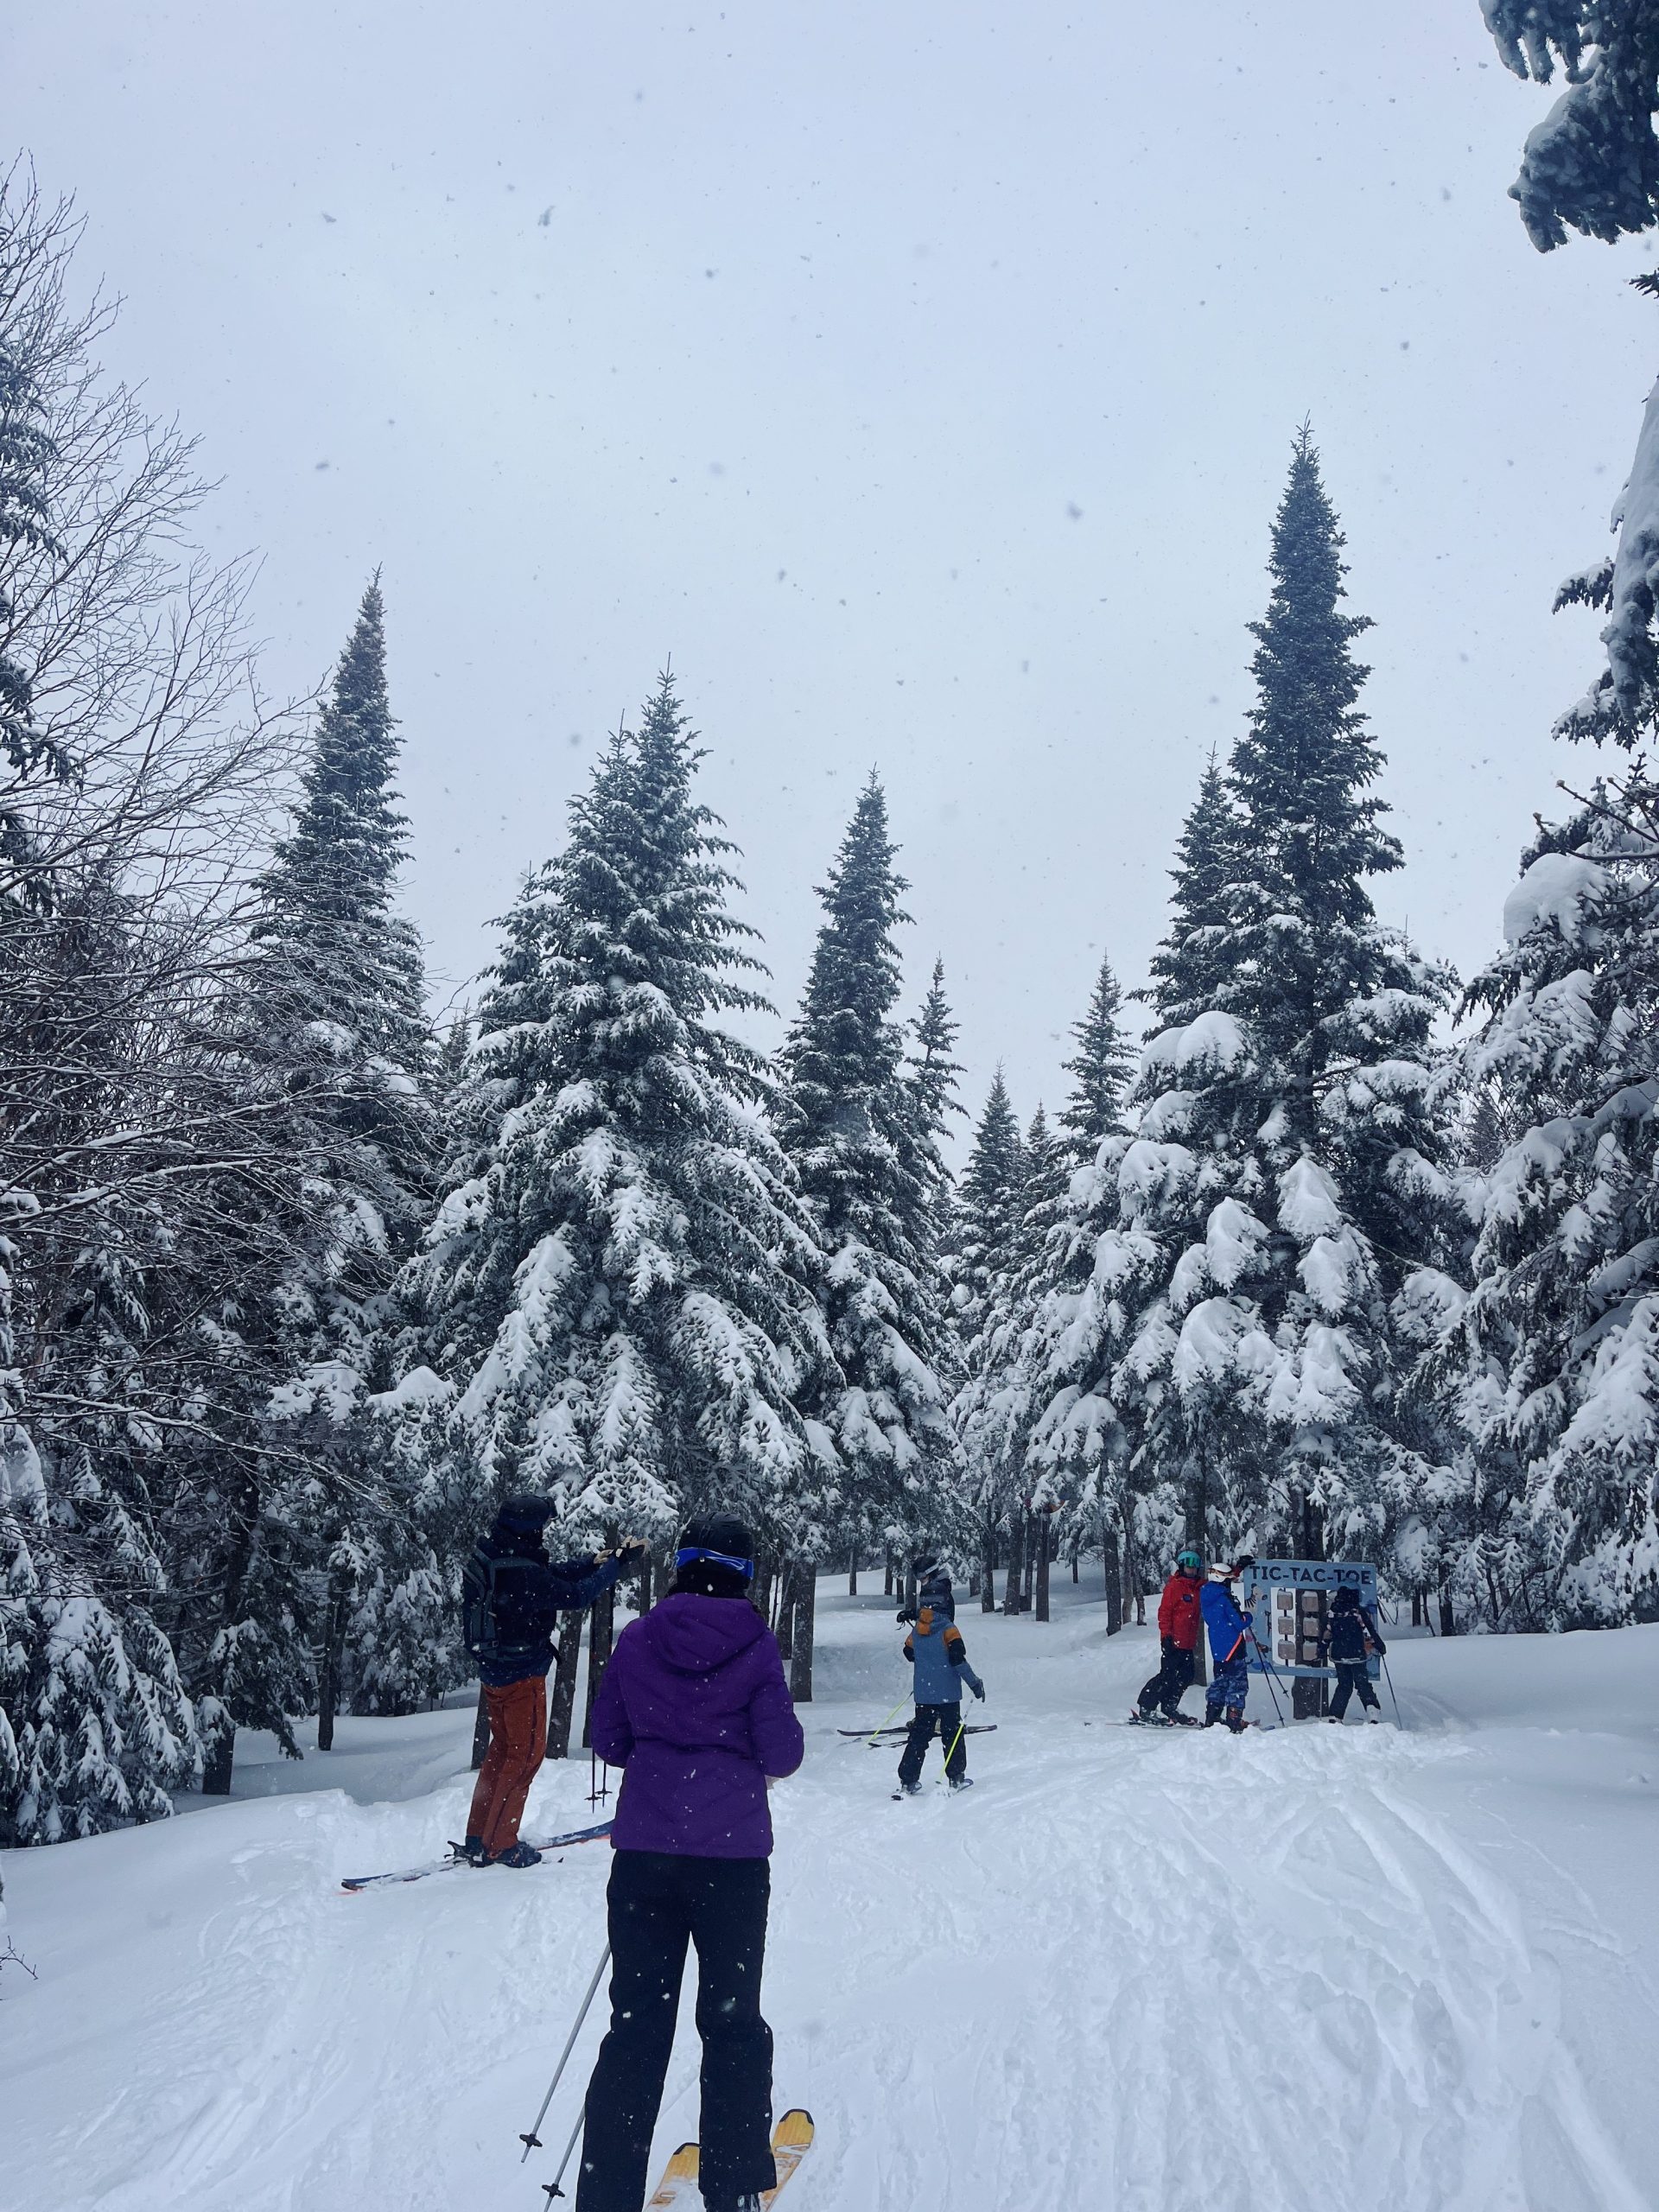 Students+embark+on+ski+trip+in+Canada